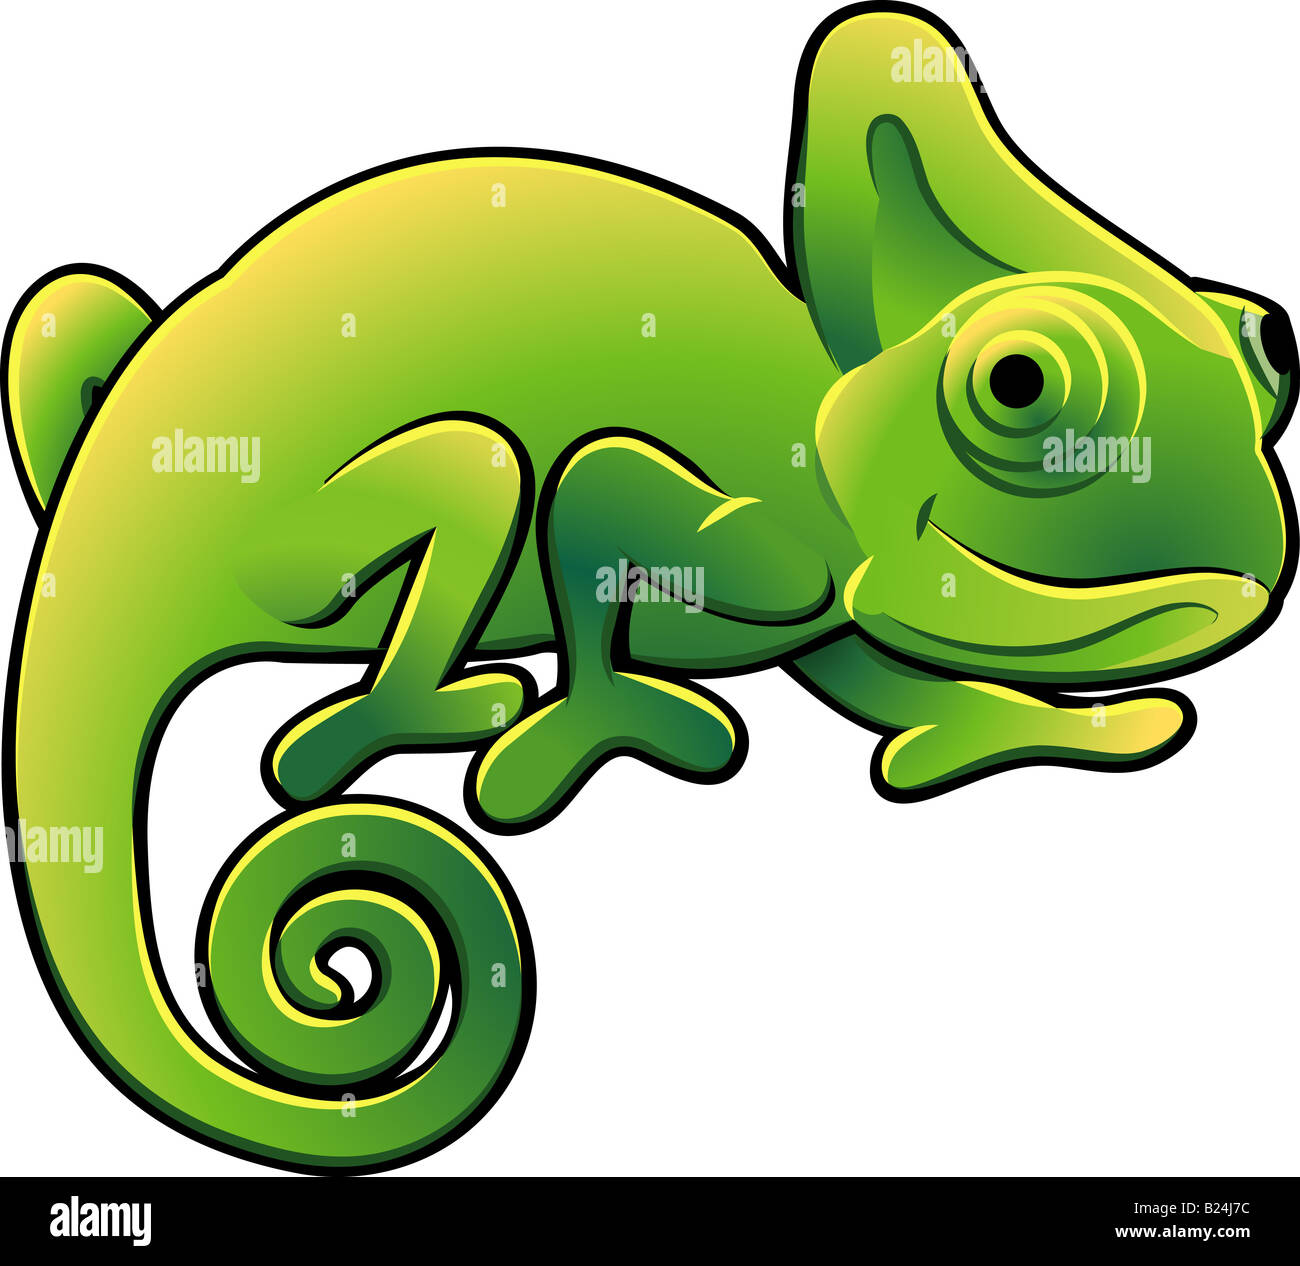 Chameleon lizard illustration fotografías e imágenes de alta resolución -  Alamy